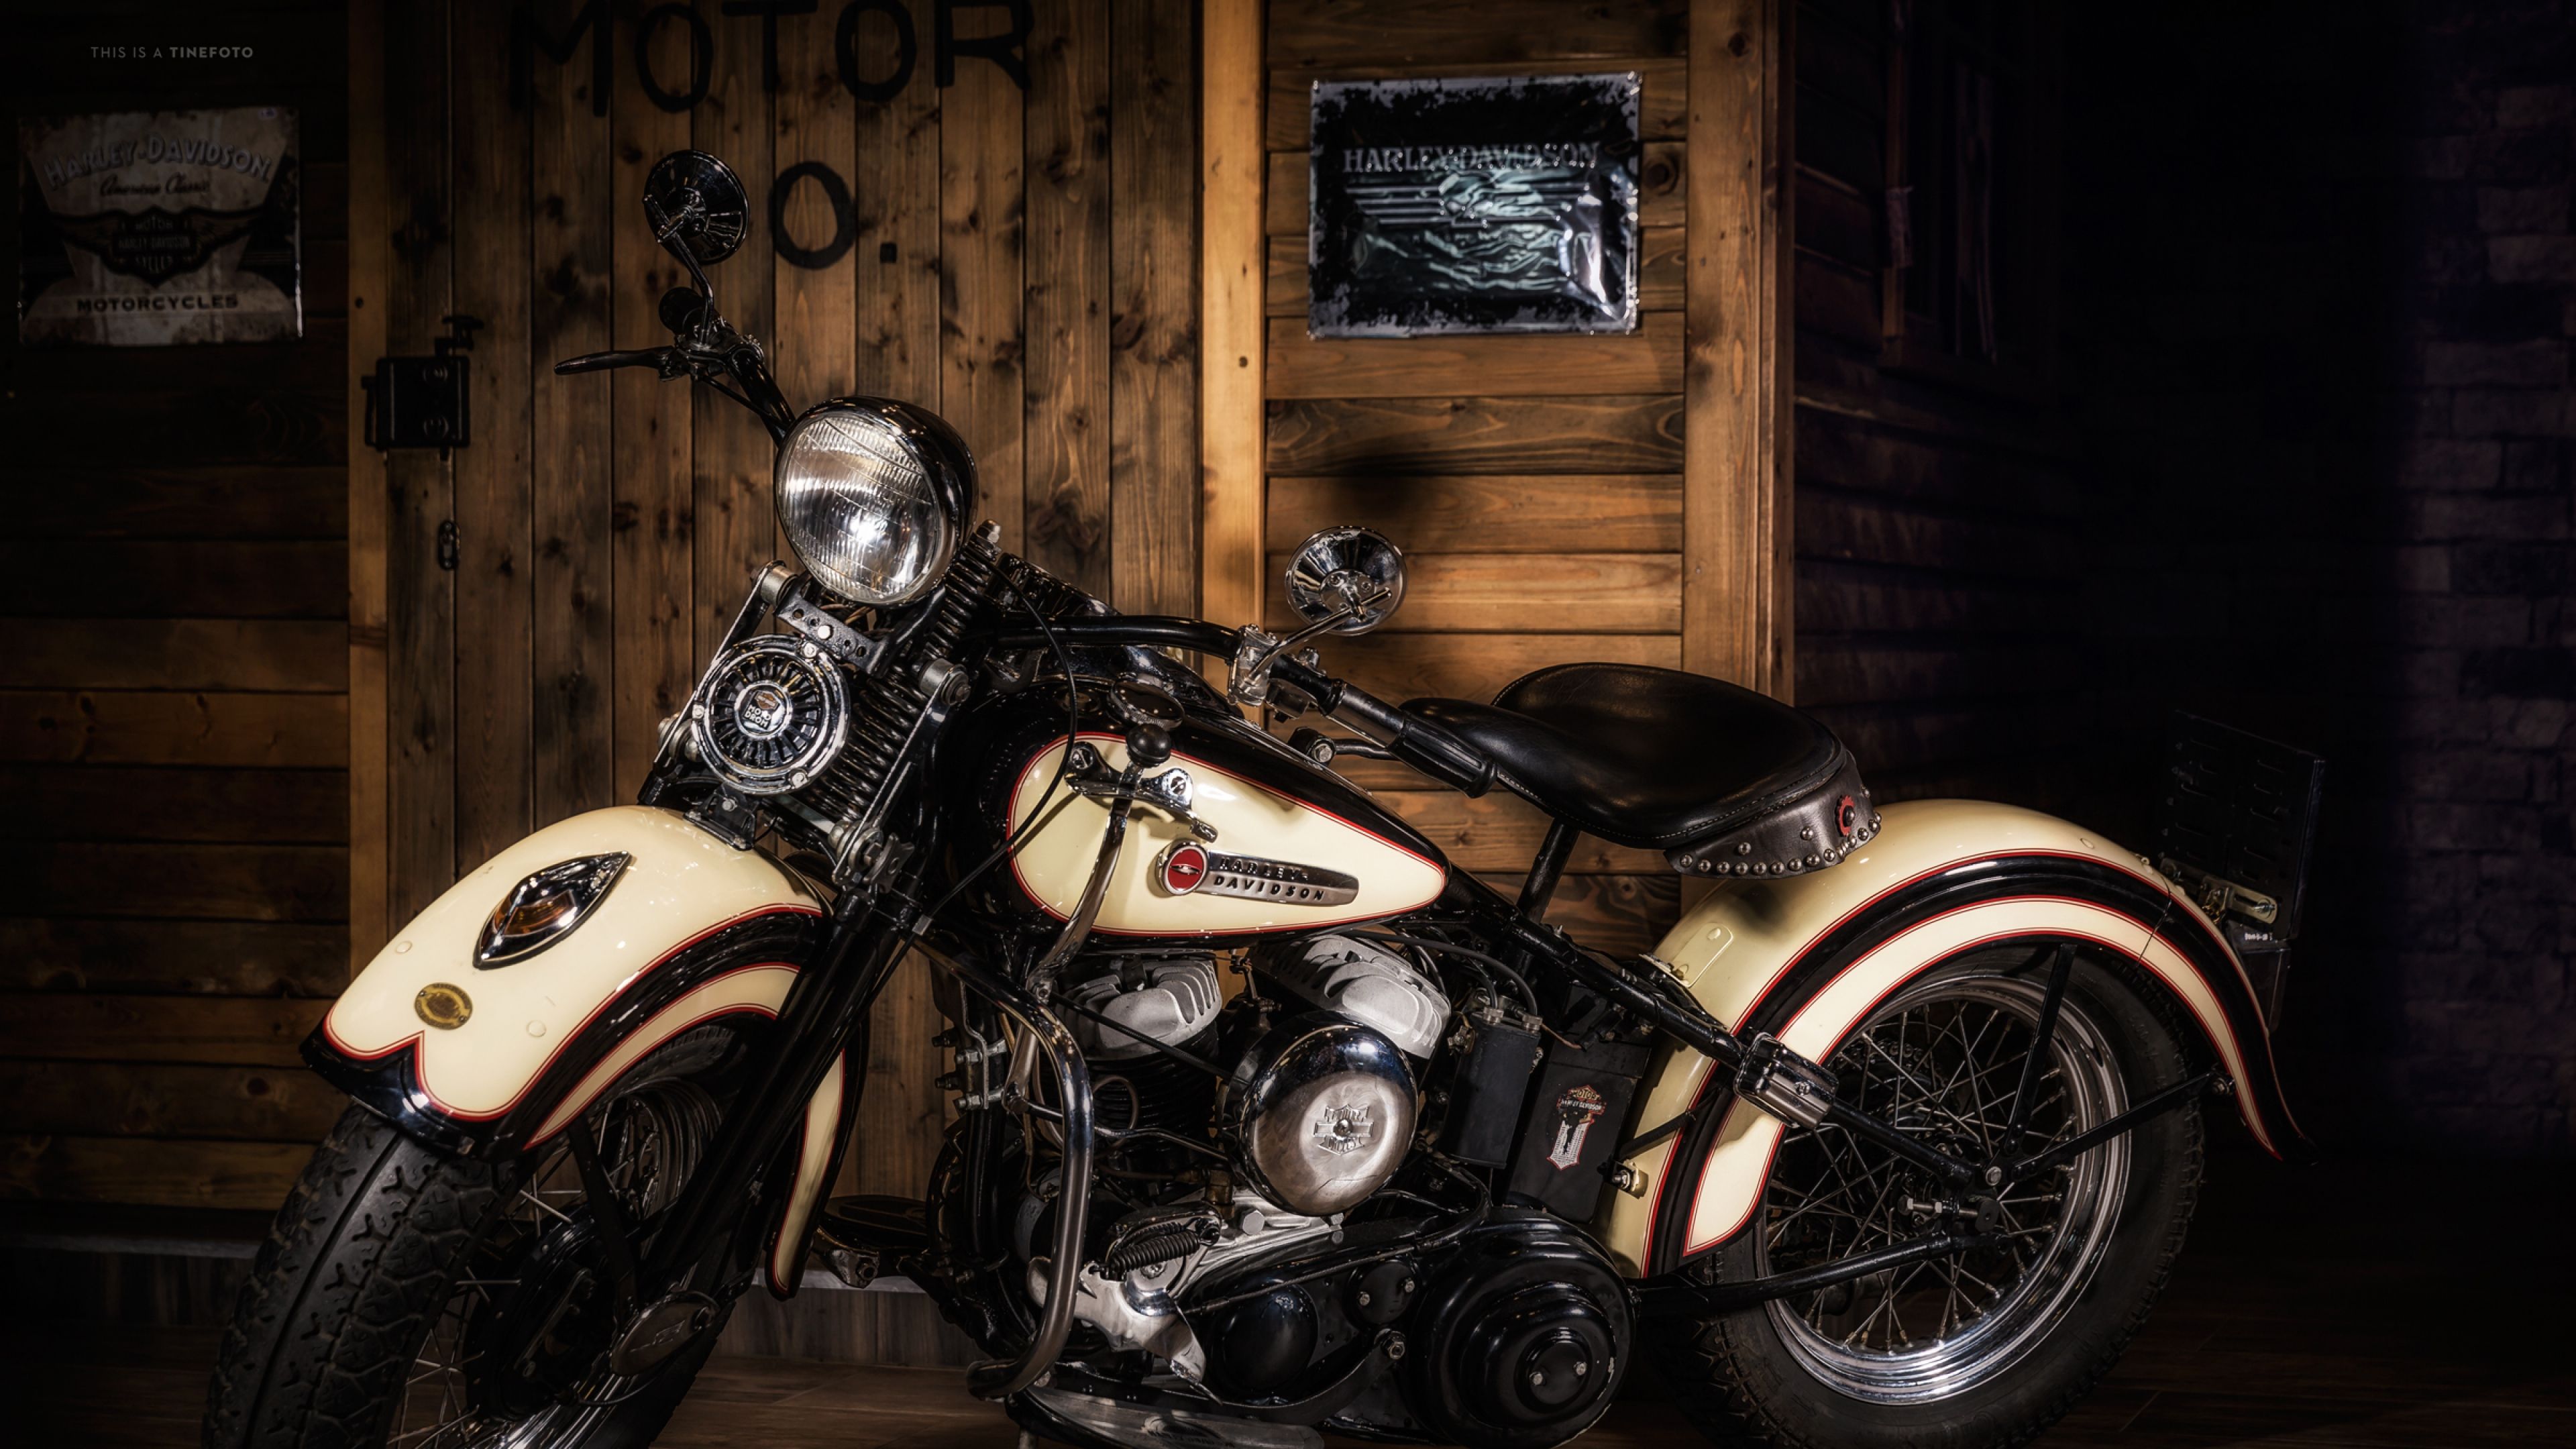 4K Ultra HD Harley davidson Wallpapers HD, Desktop Backgrounds